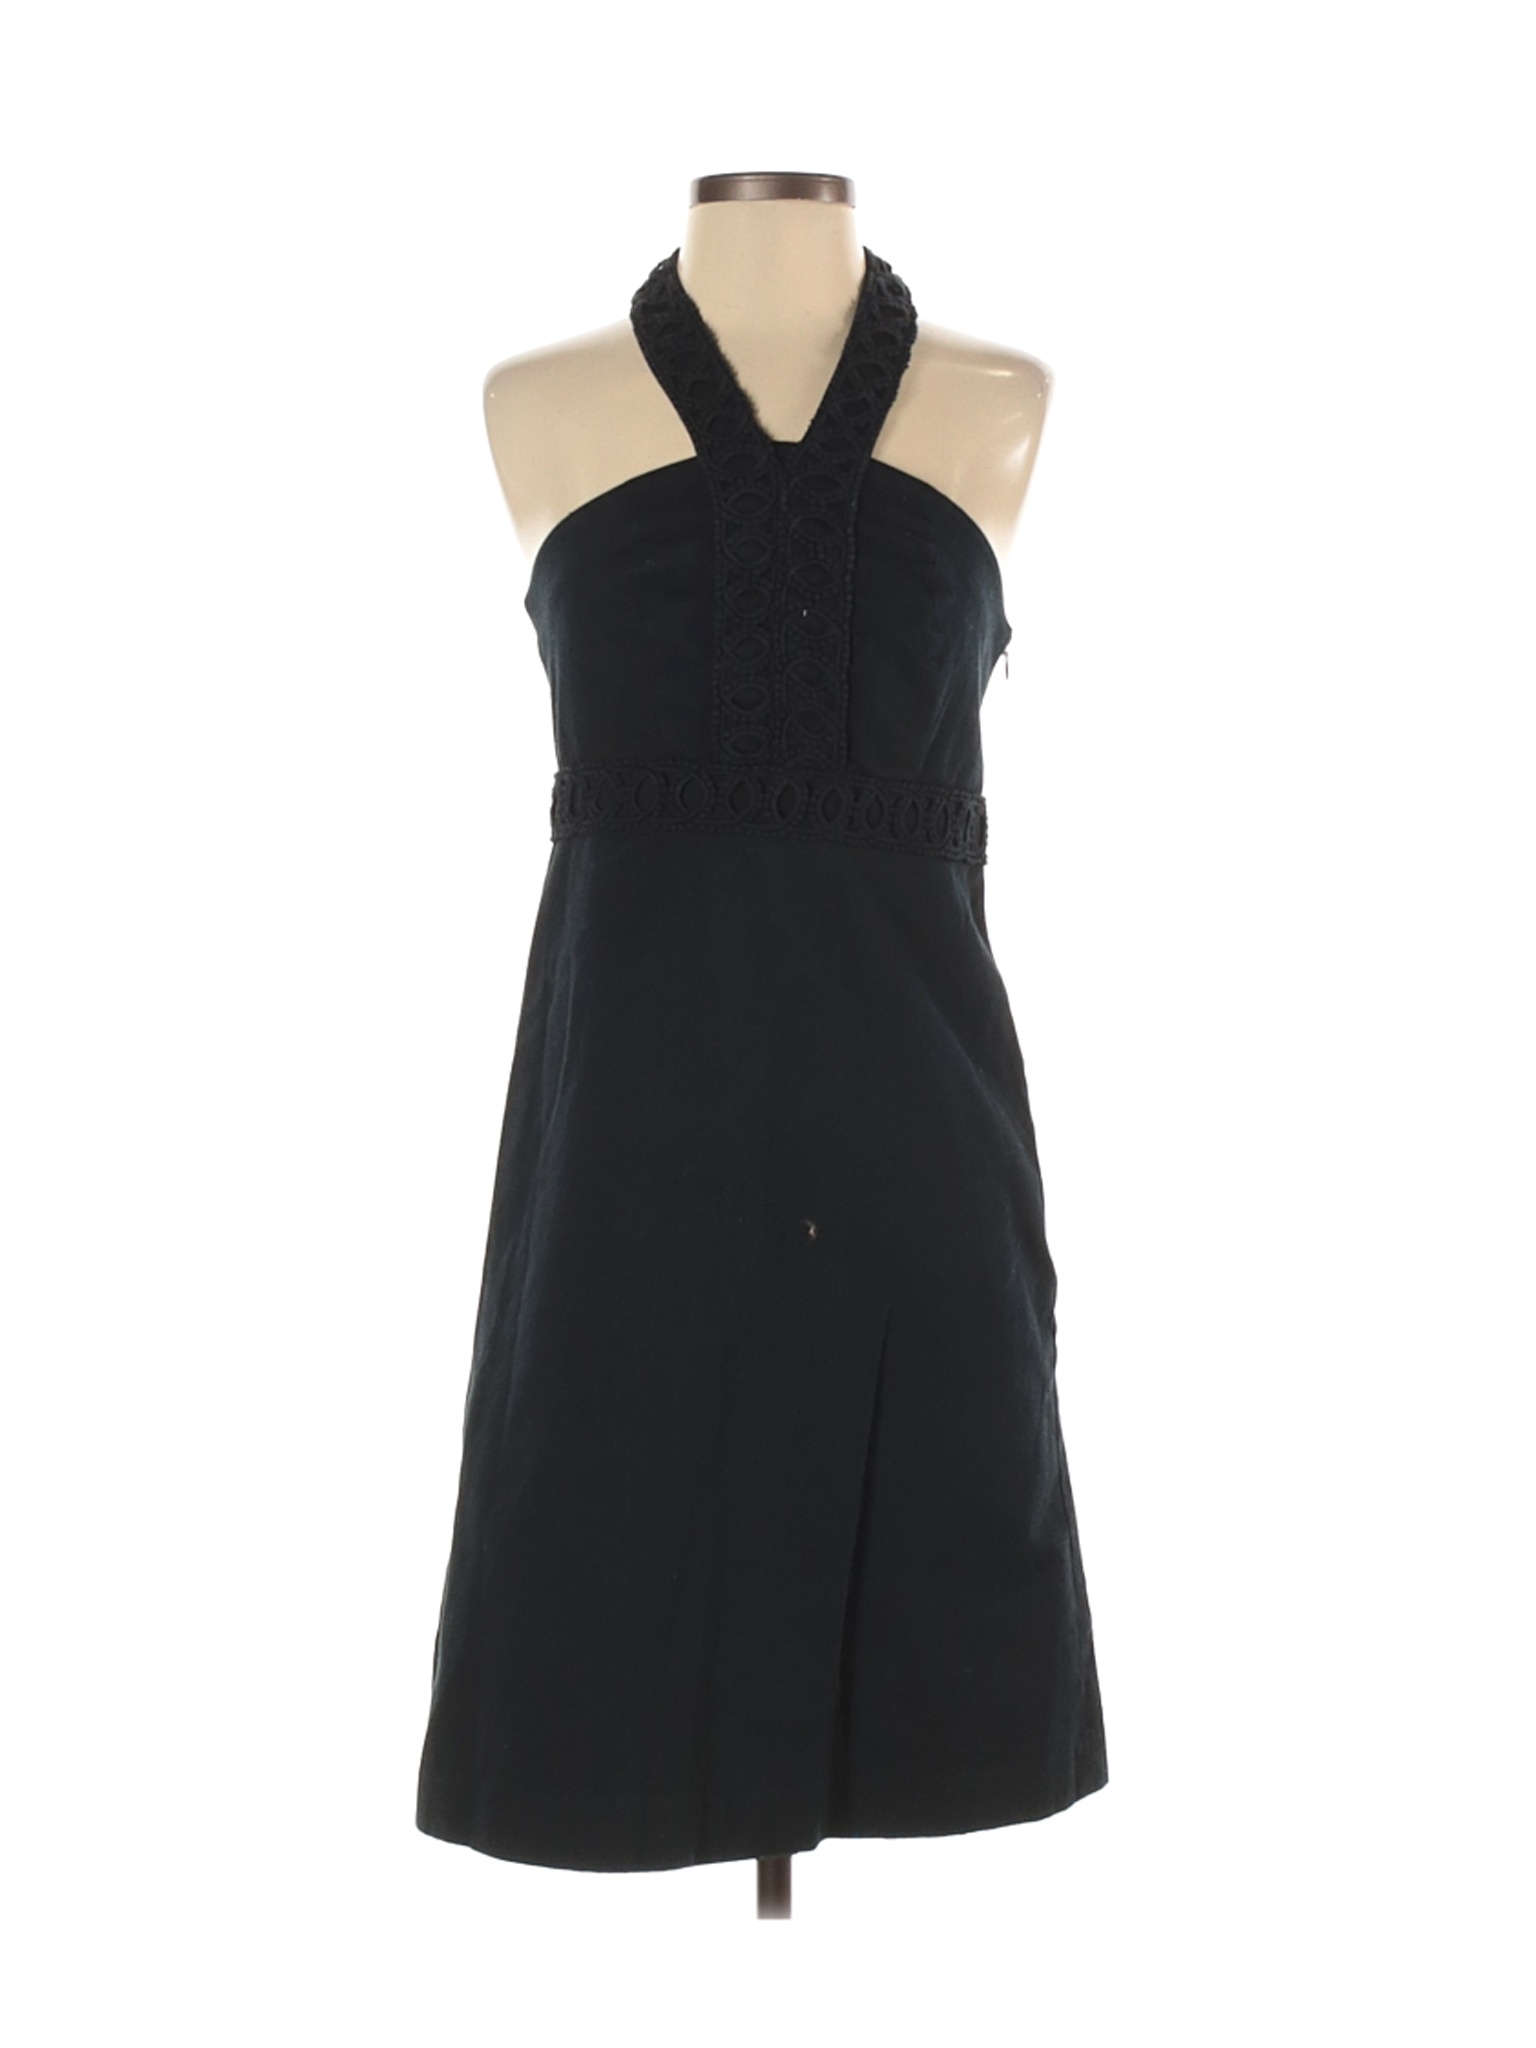 Merona Women Black Cocktail Dress 4 | eBay